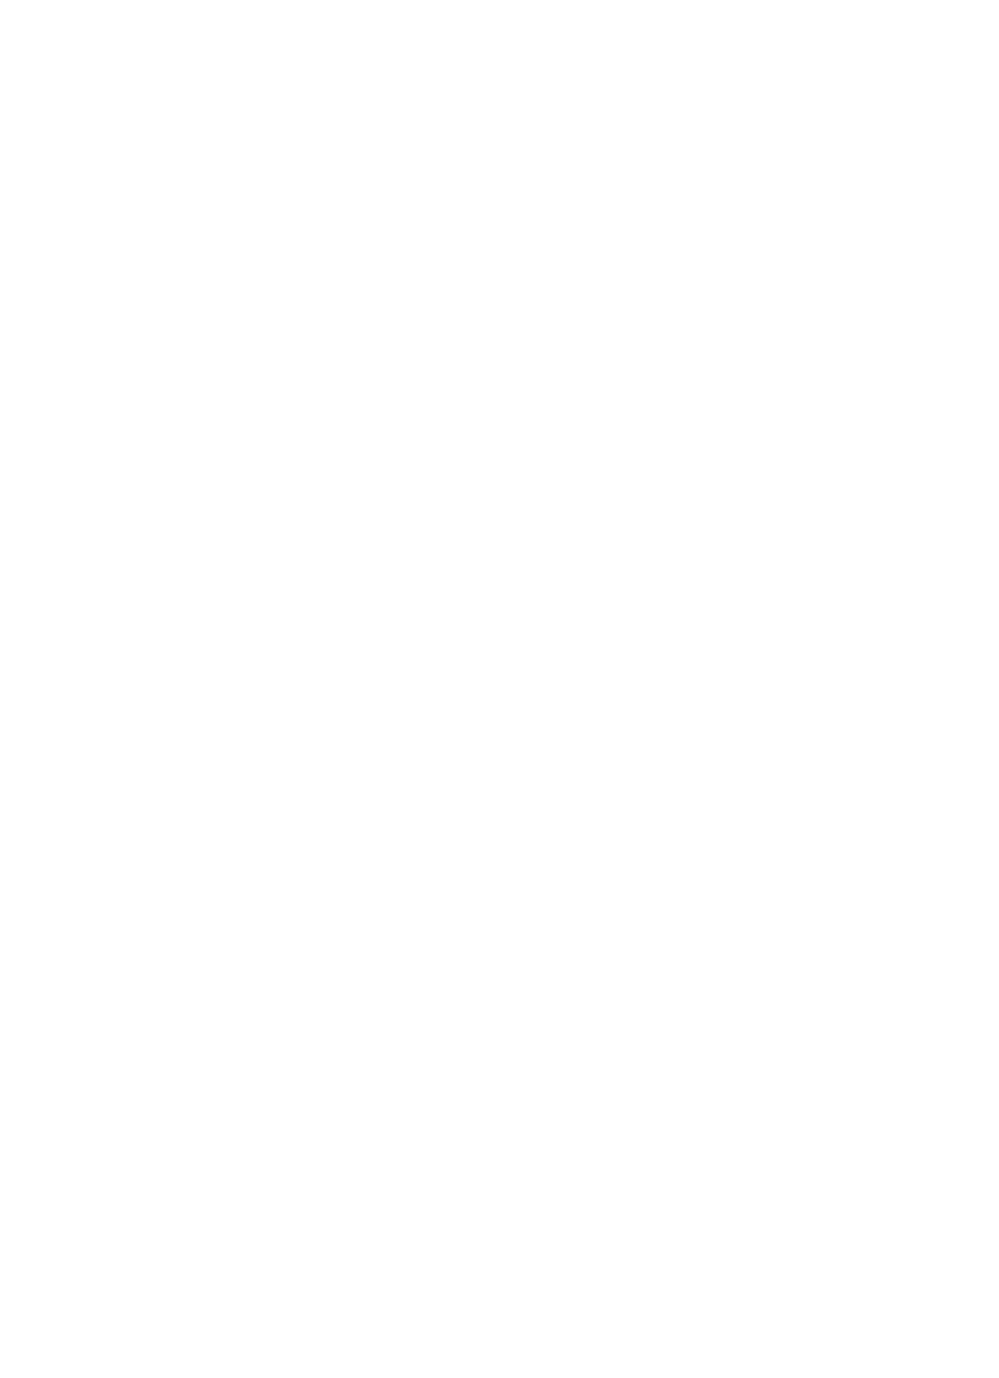 Channel 4 logo white